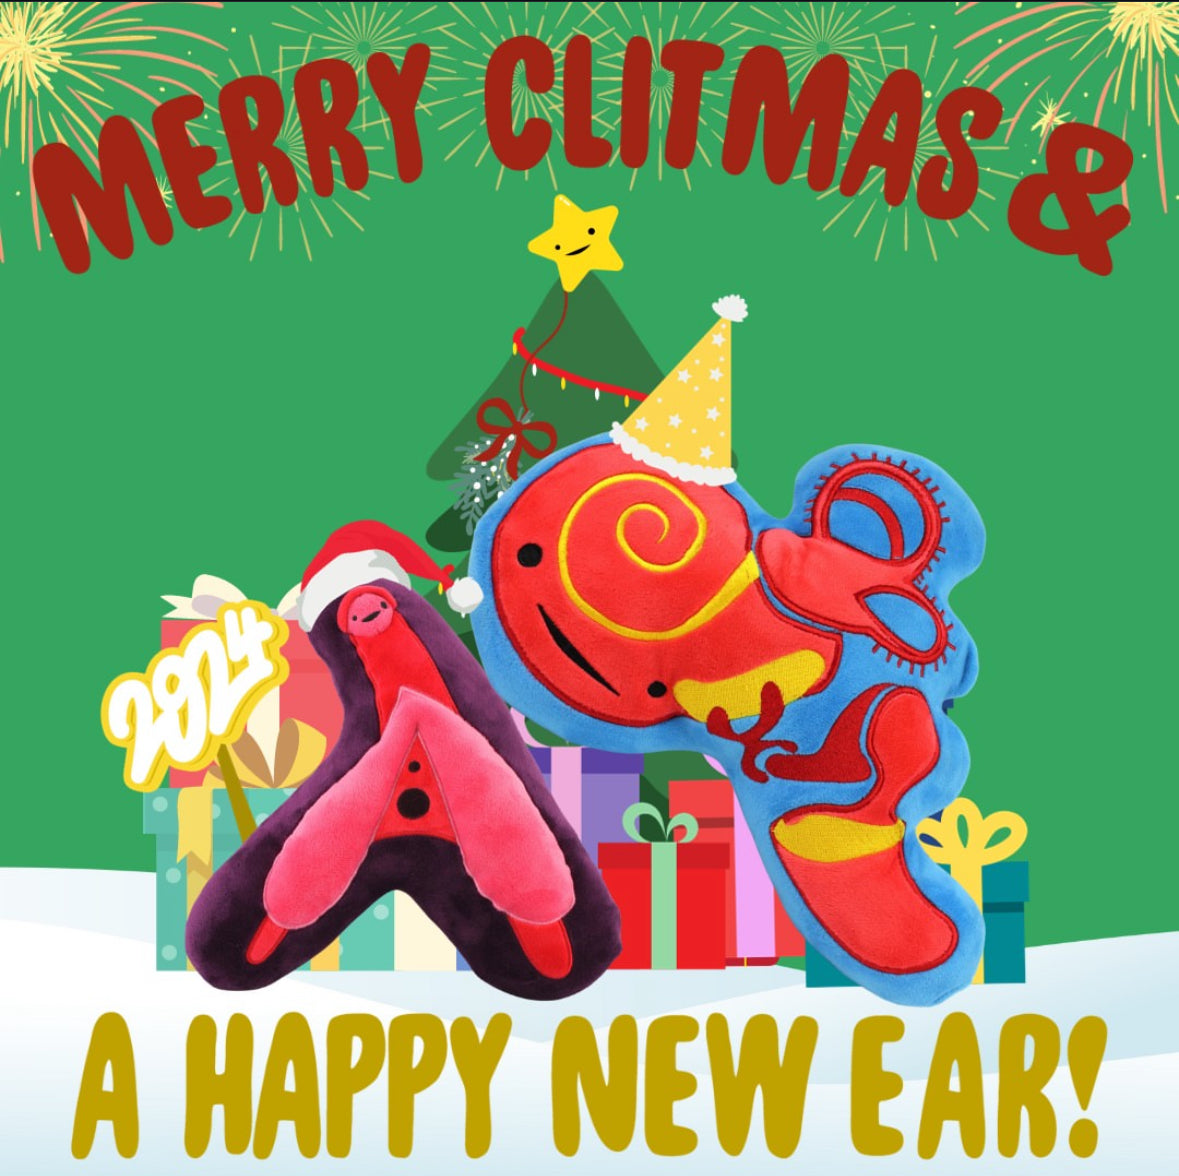 e-Gift Certificate "Merry Clitmas & A Happy New Ear"